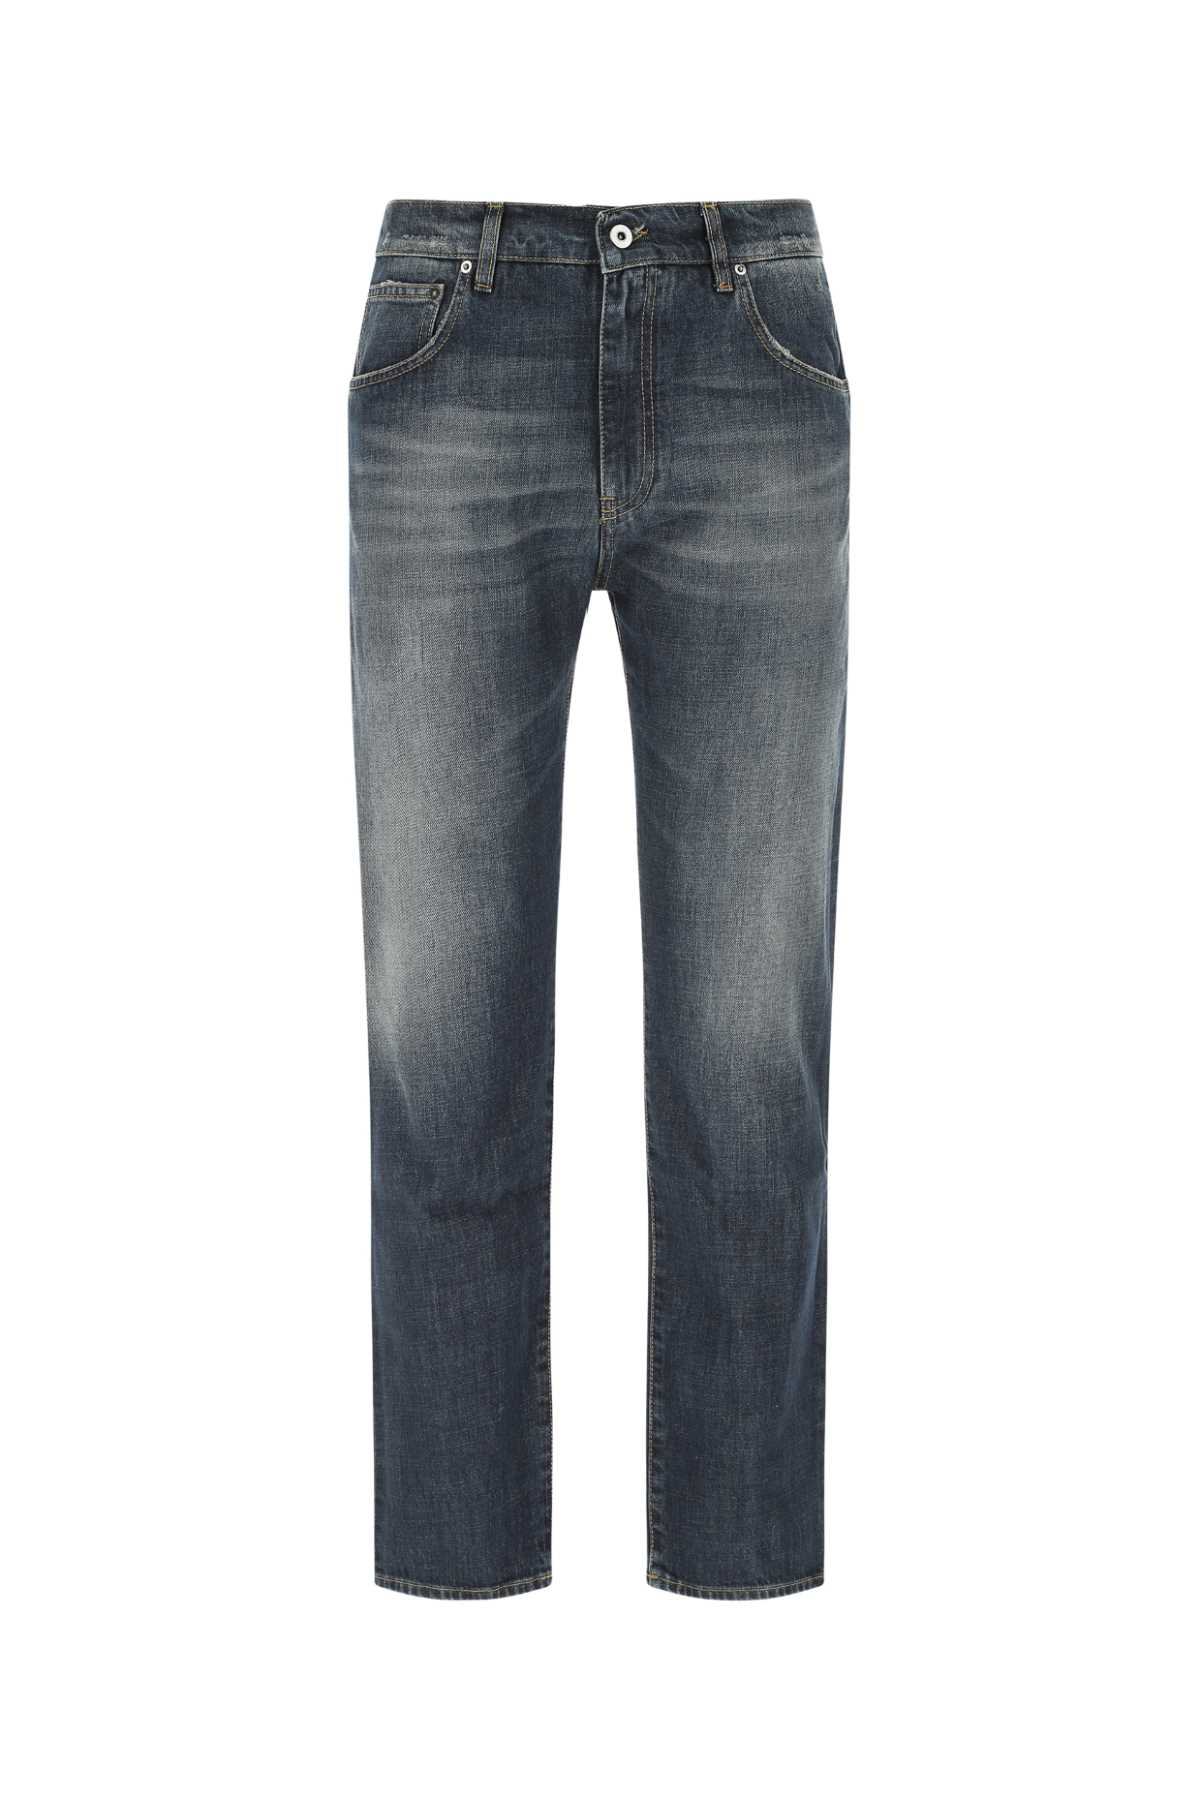 14 Bros Denim Cheswick Jeans